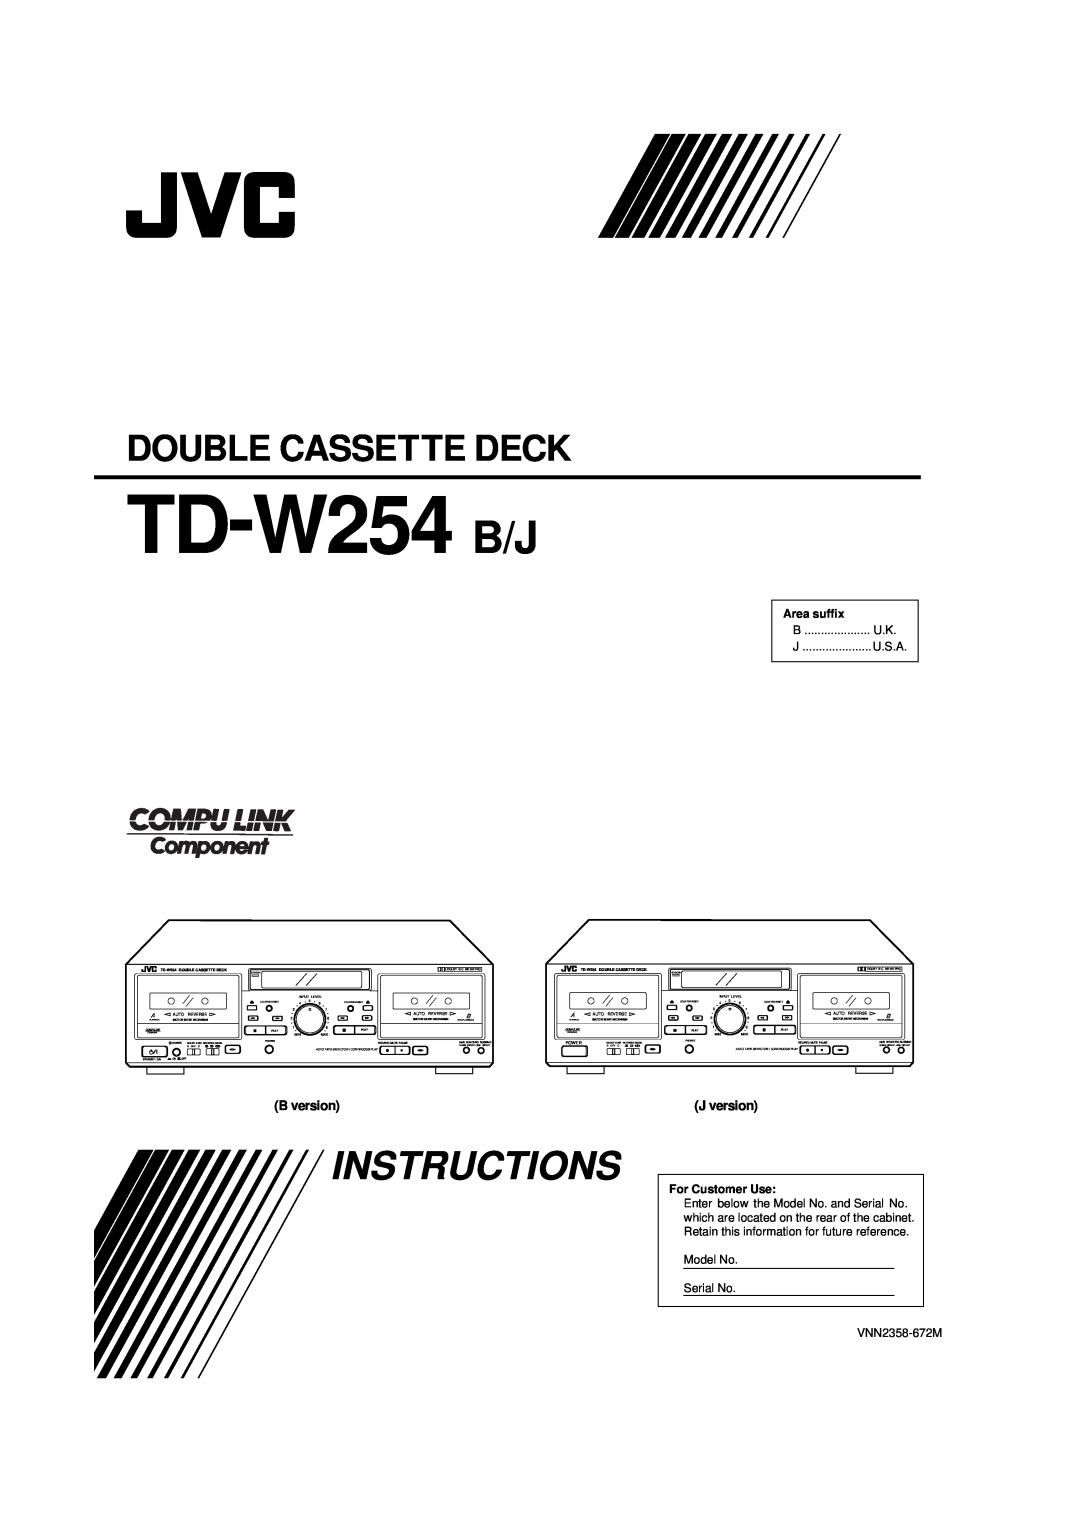 JVC manual B version, TD-W254 B/J, Instructions, Double Cassette Deck, Area suffix, U.S.A, For Customer Use, J version 